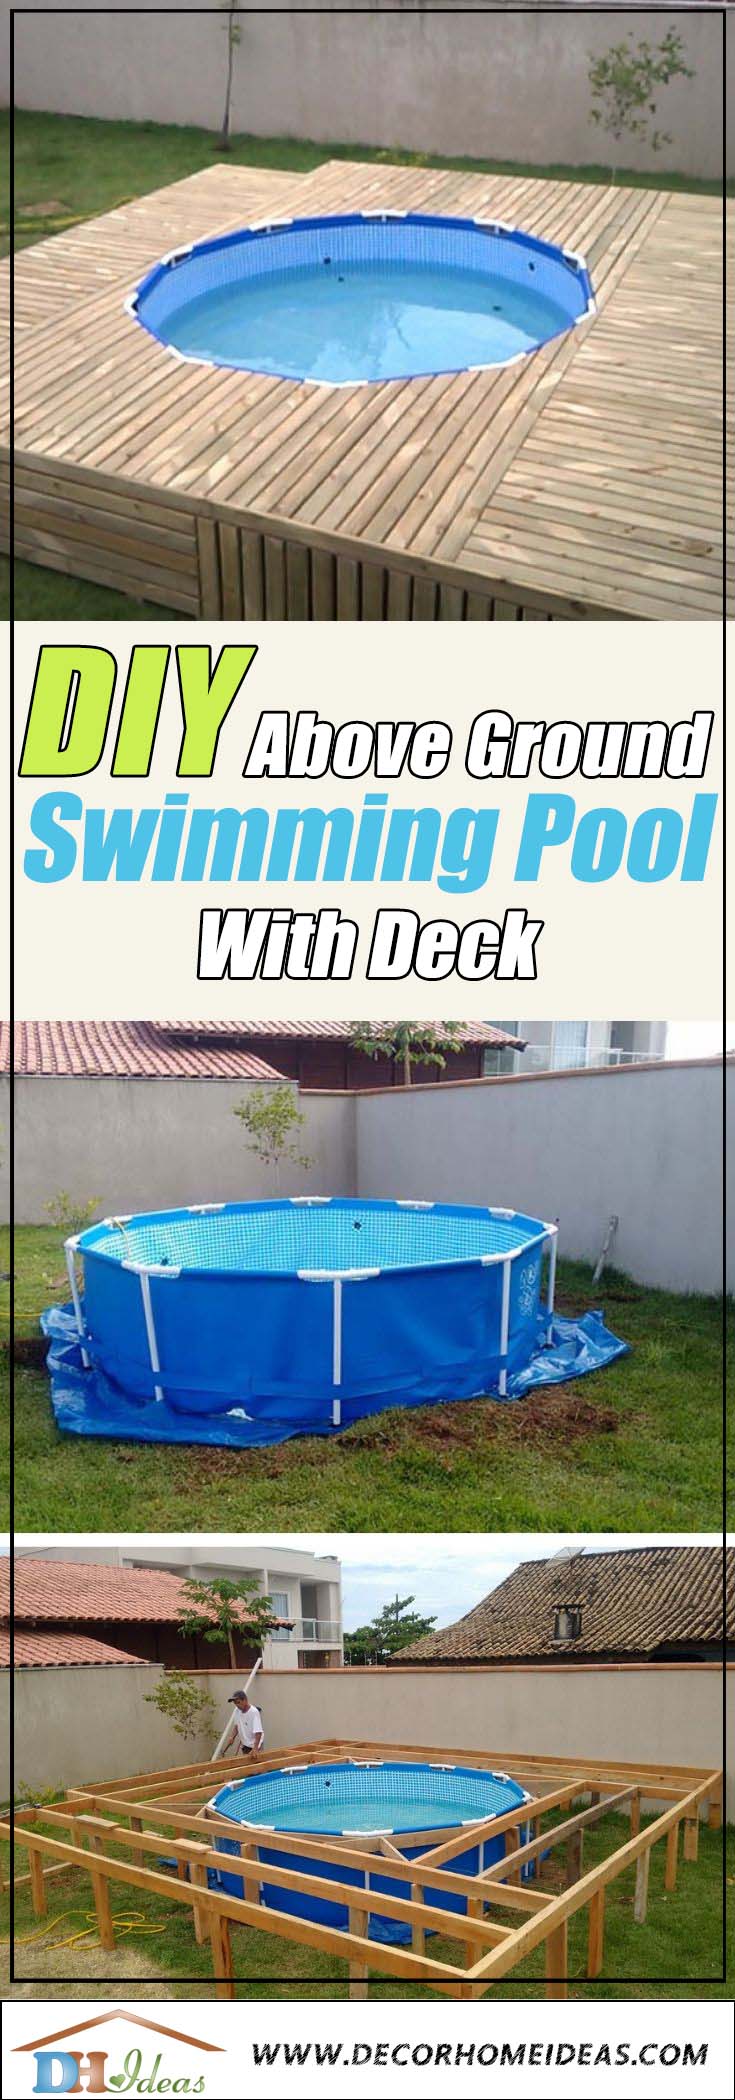 DIY Above Ground Swımmıng Pool Wıth Deck #pool #dıƴ #deck #decorhomeideas